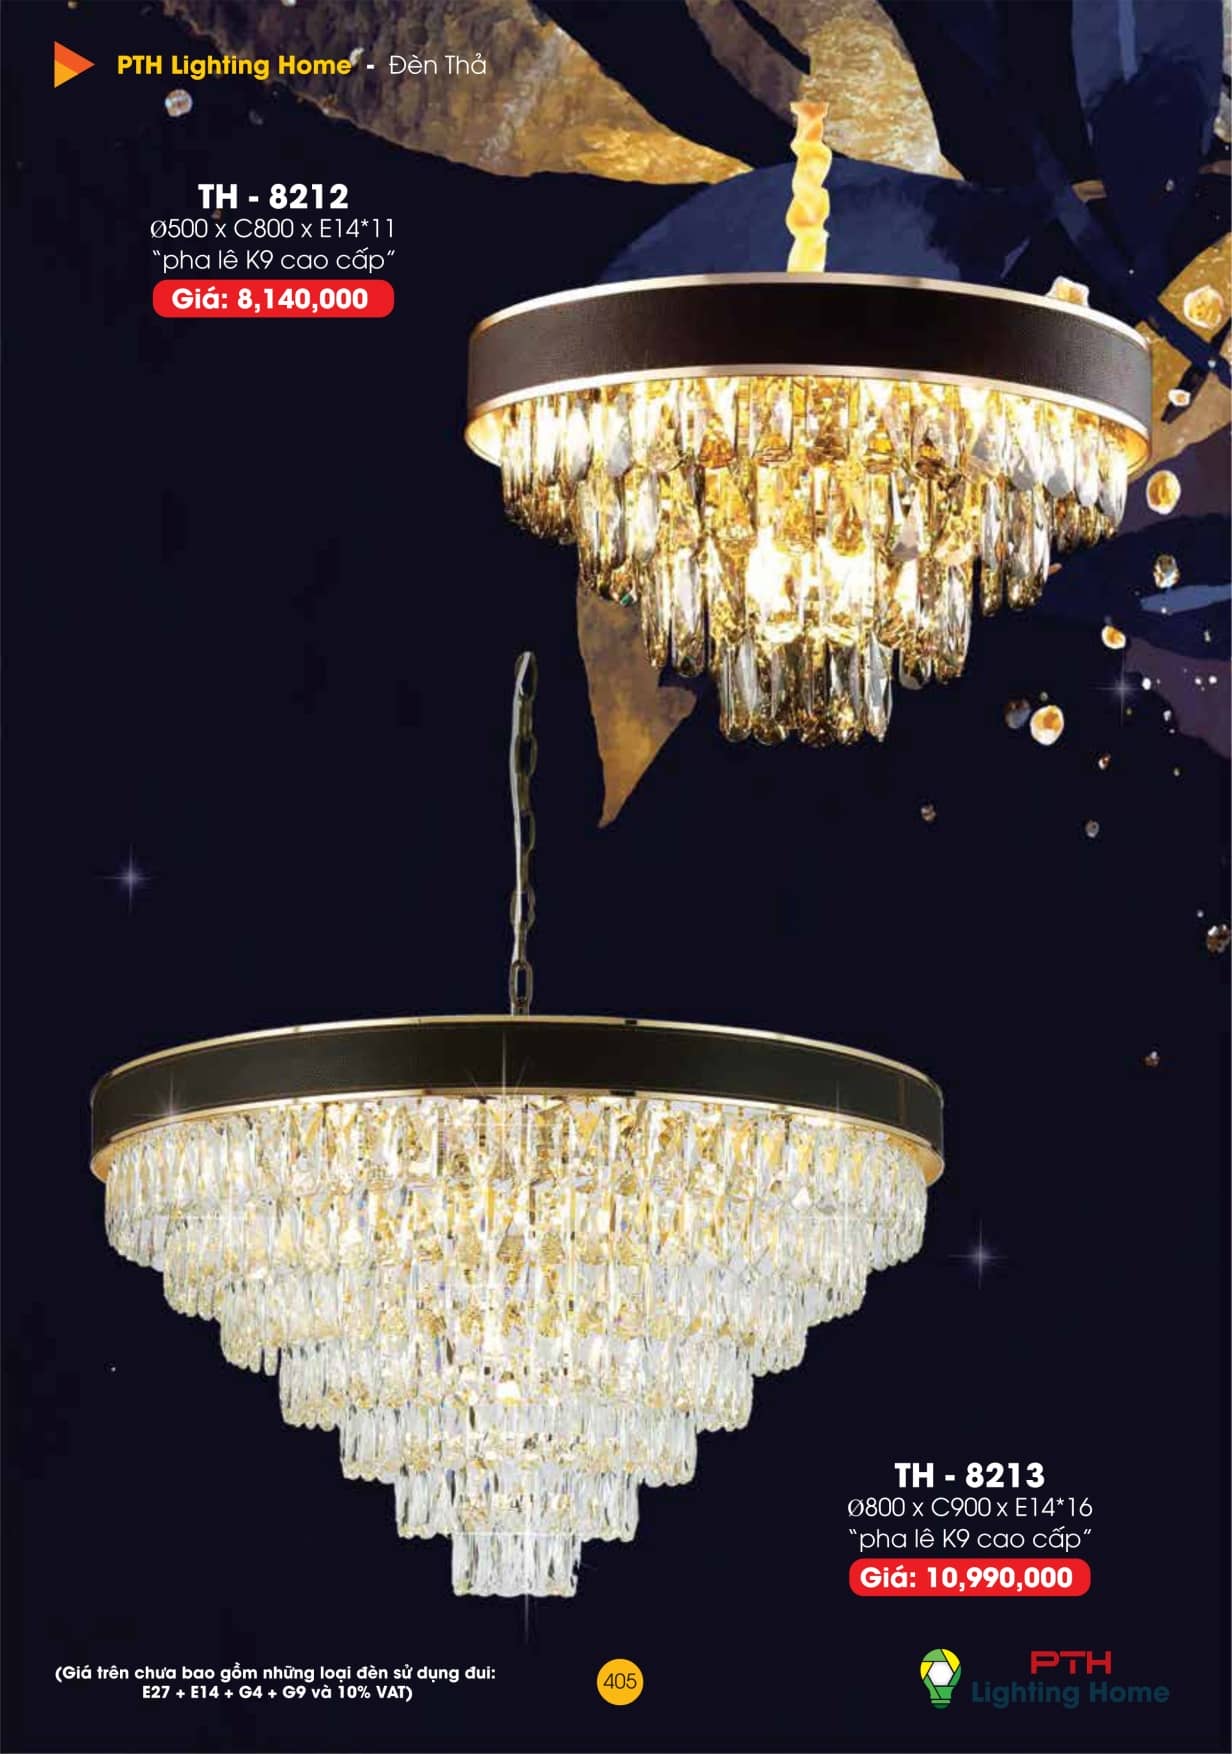 catalogue-bang-gia-den-led-trang-tri-pth-lighting-home-407